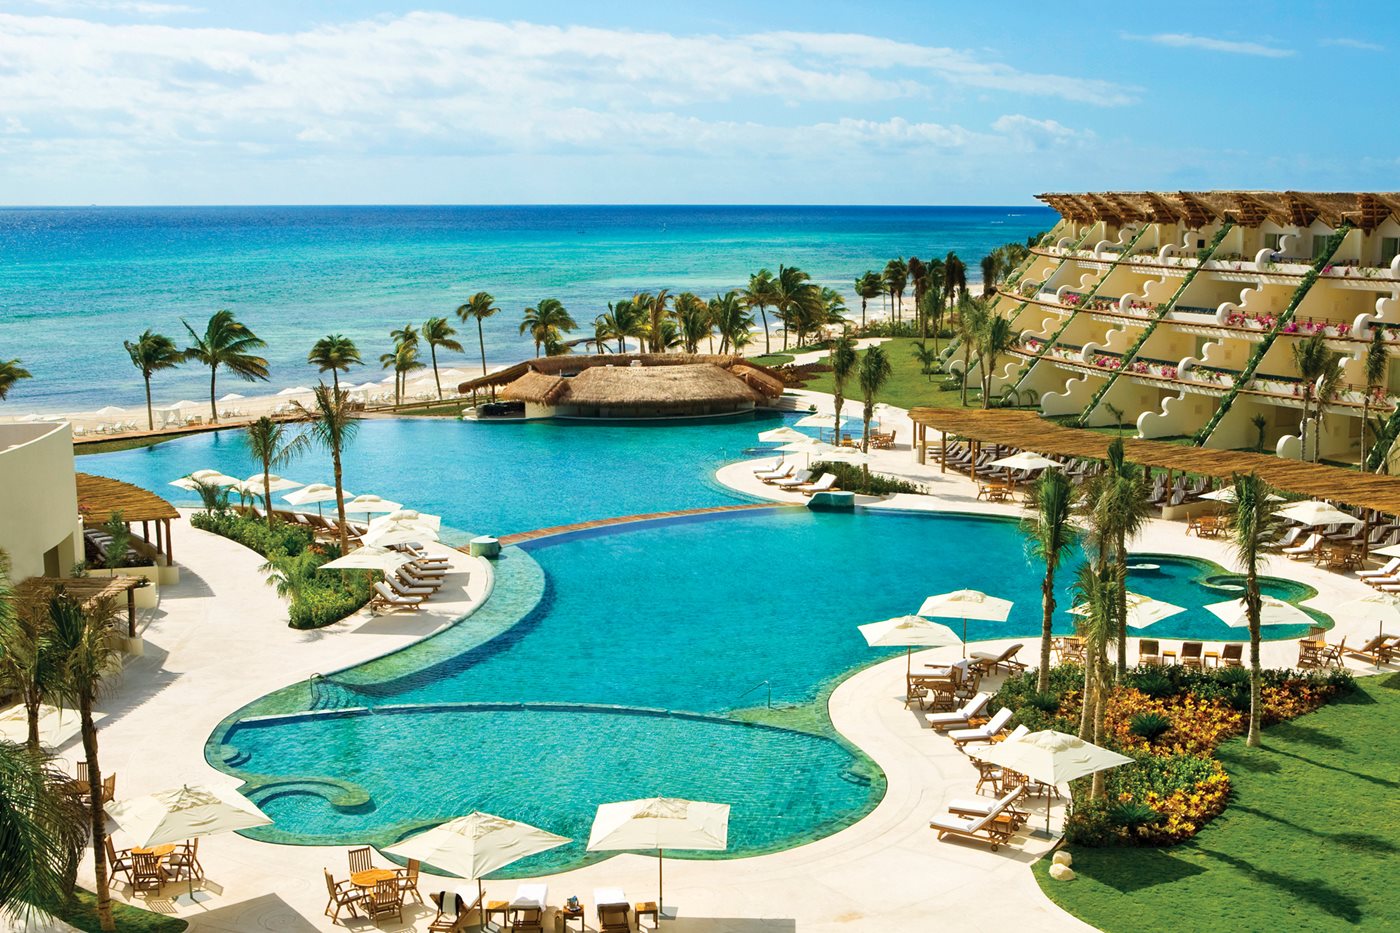 best hotels in riviera maya - Grand Velas Riviera Maya - main pool